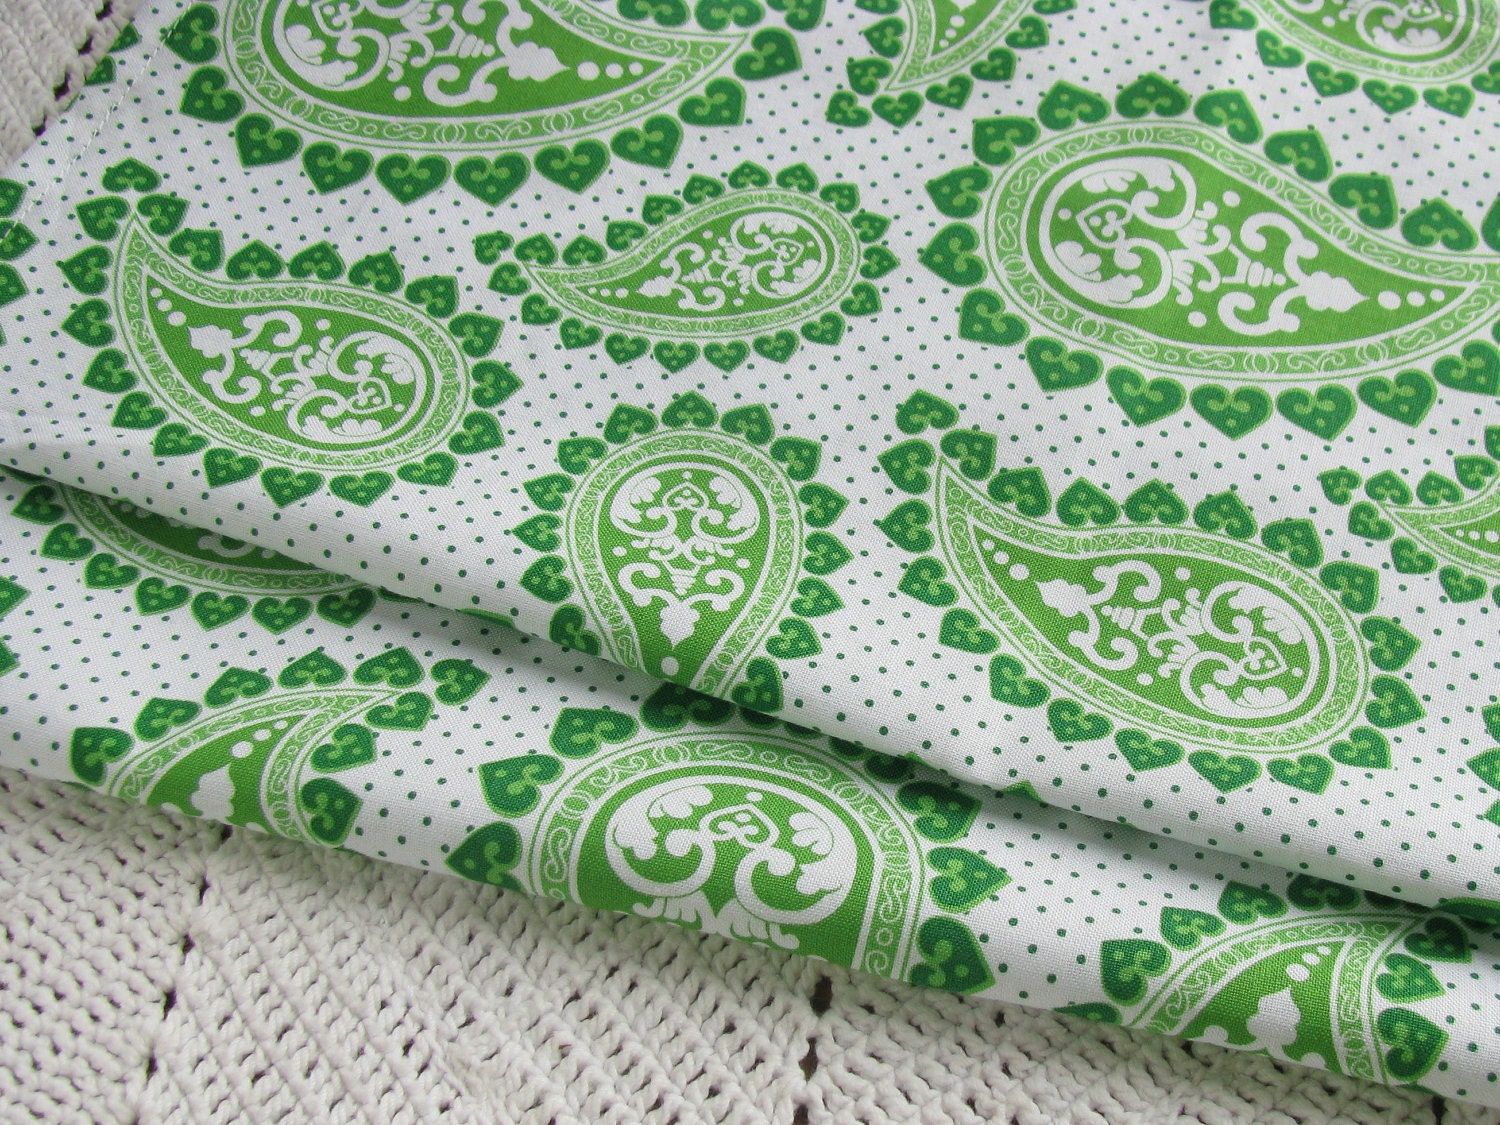 2 Large Single Layer Cloth Napkins - Kelly Green Paisley - veryverdant